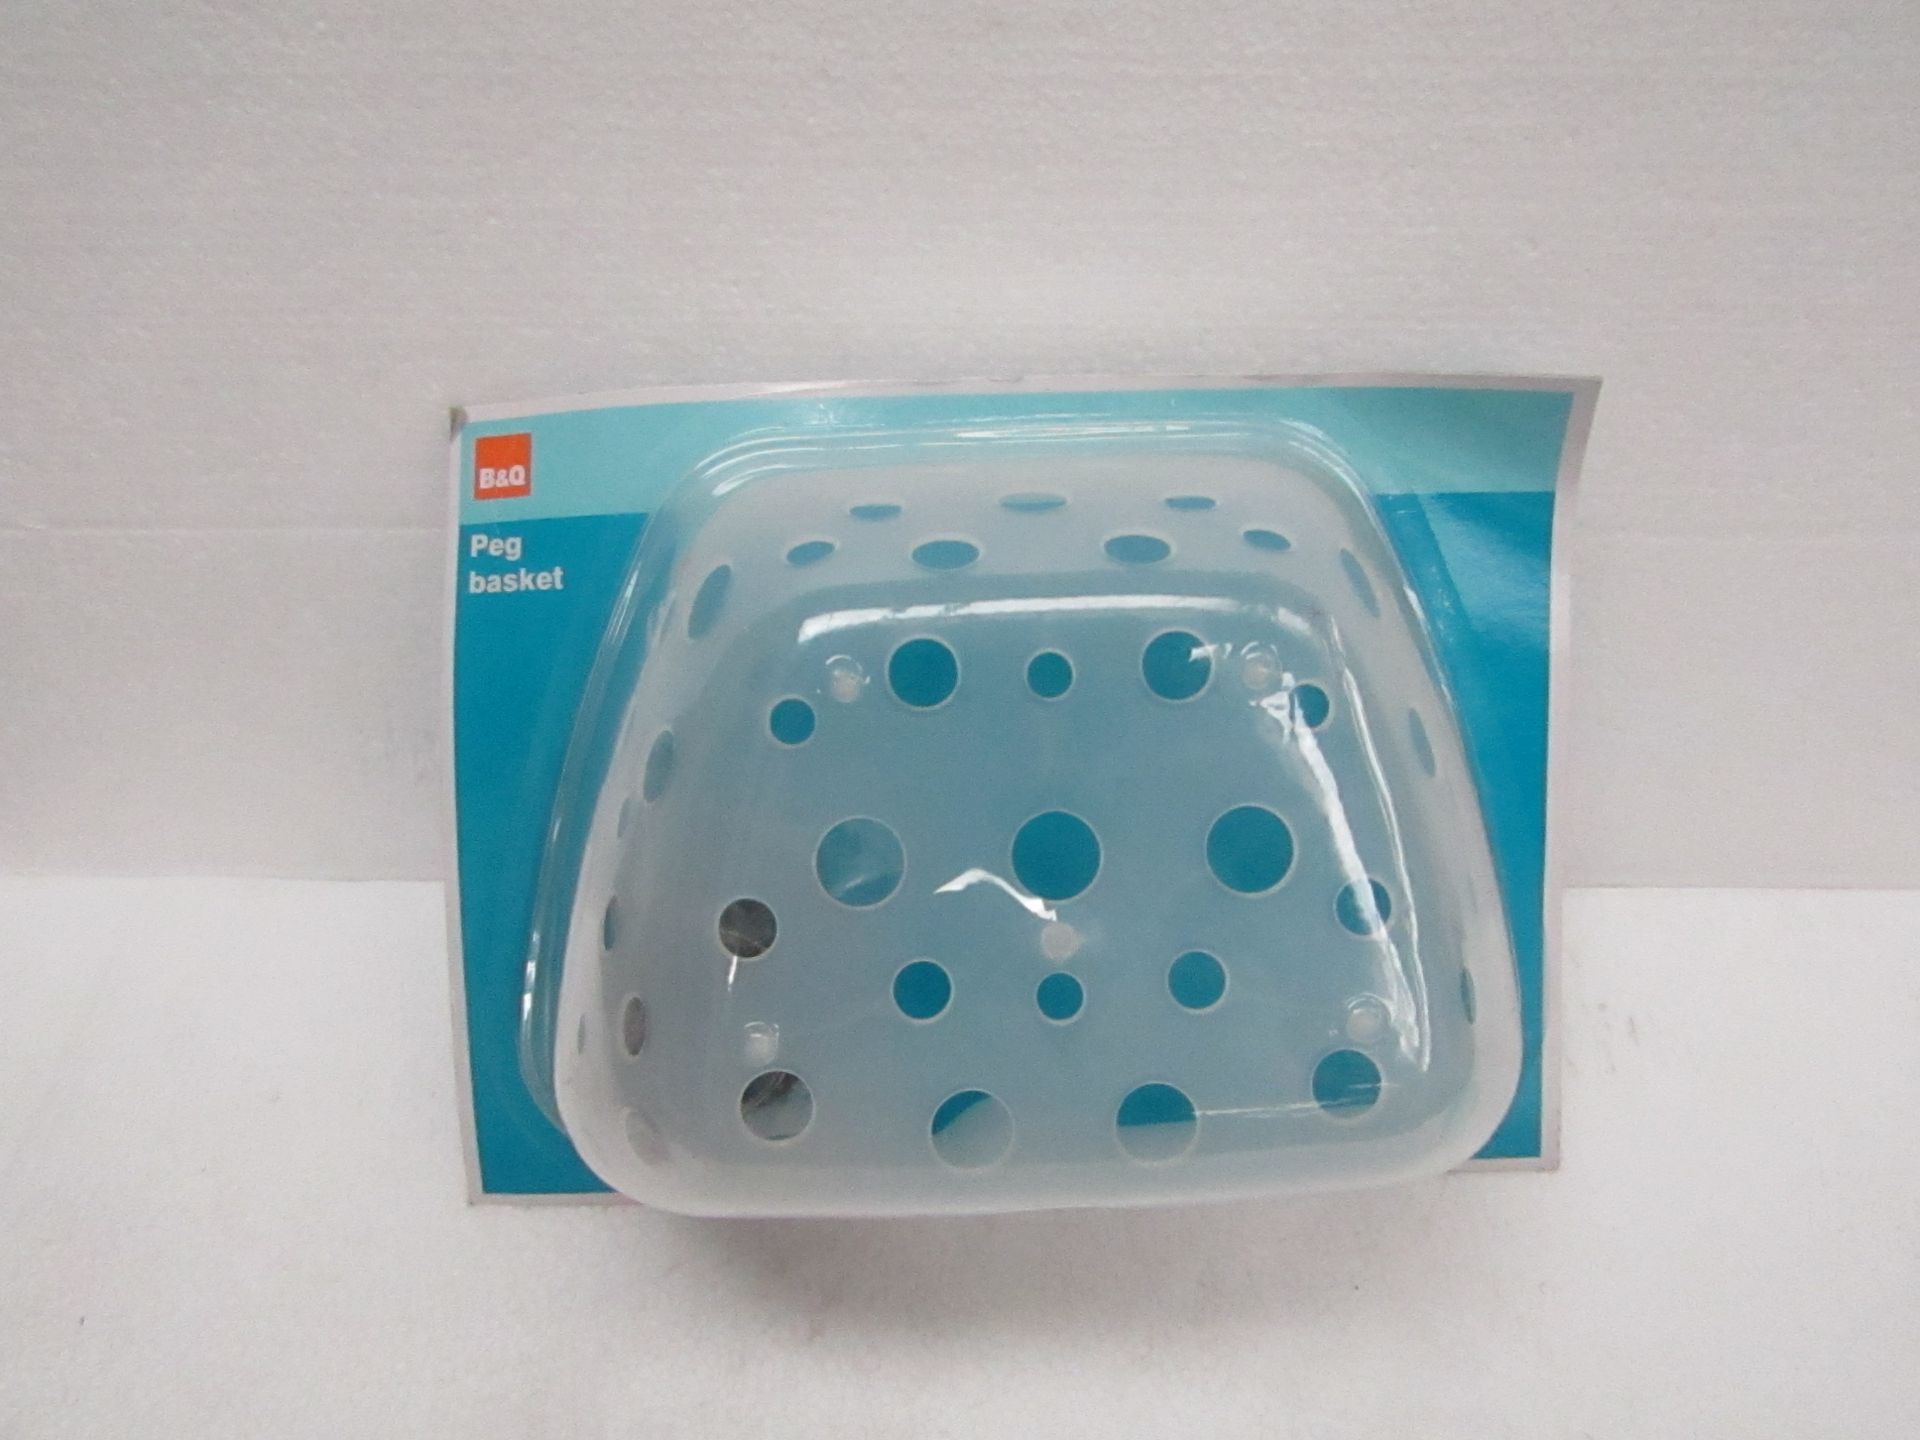 2x B&Q - Plastic Peg Basket - New & Packaged.